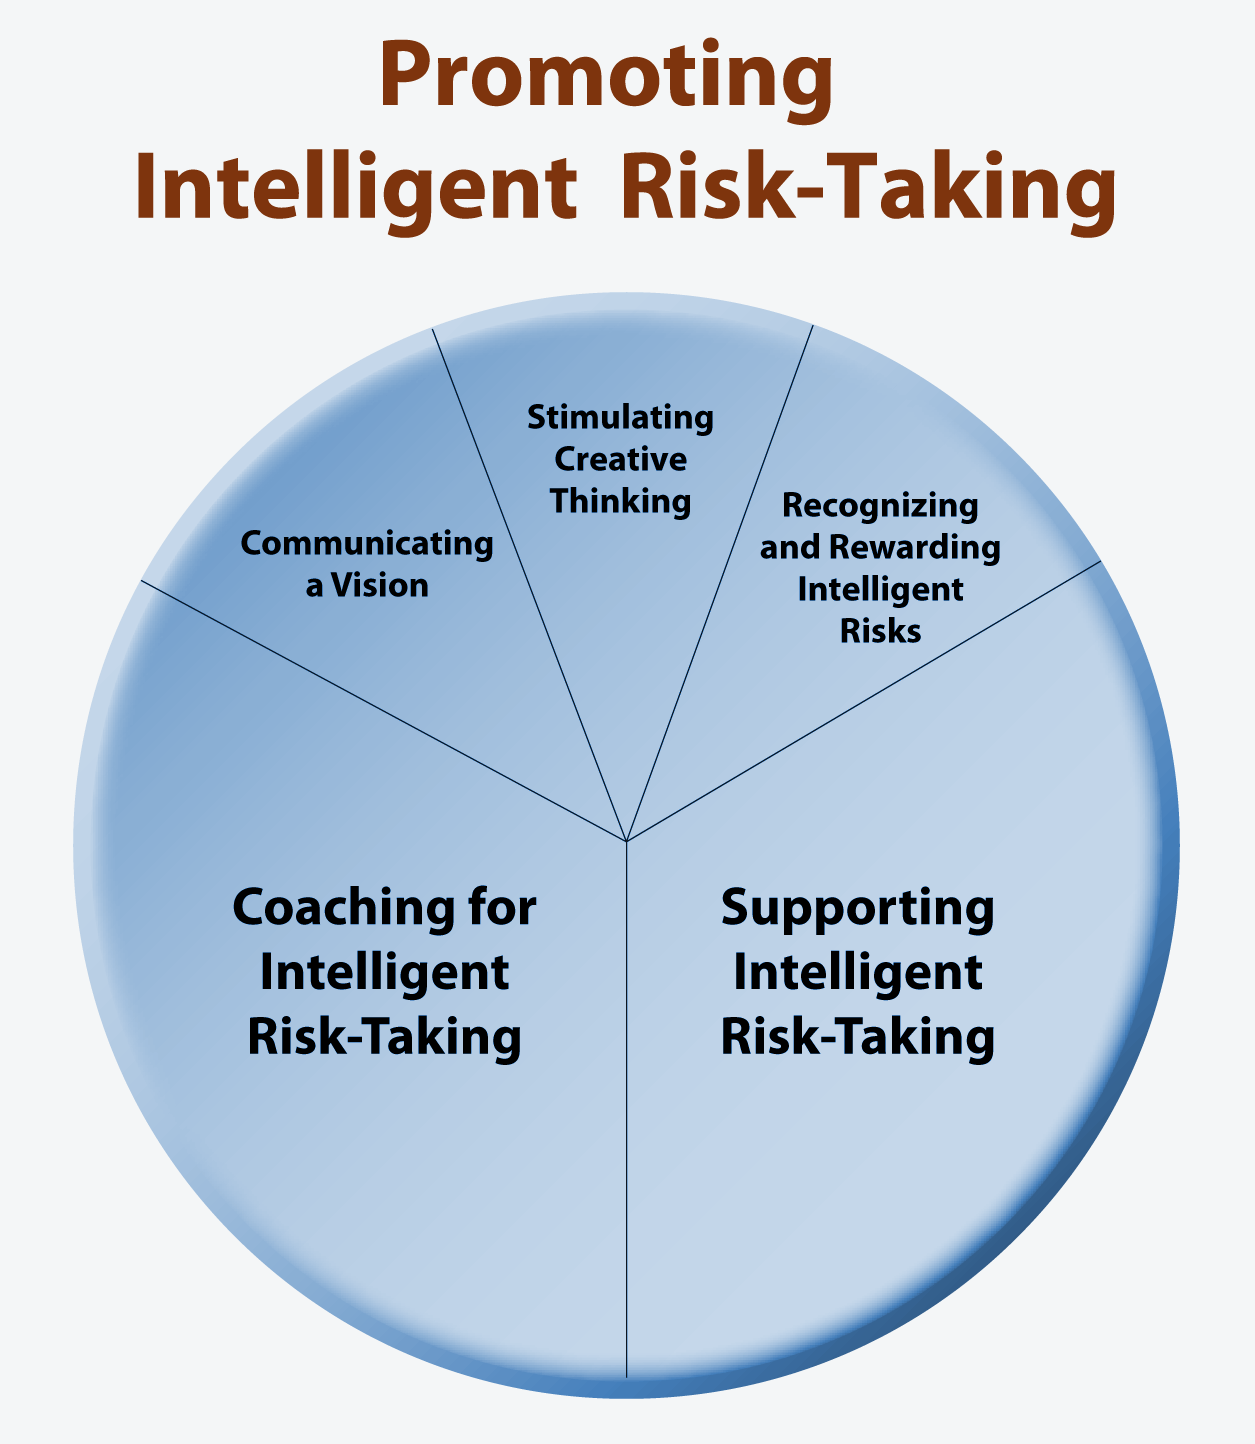 Promoting Risk-Taking